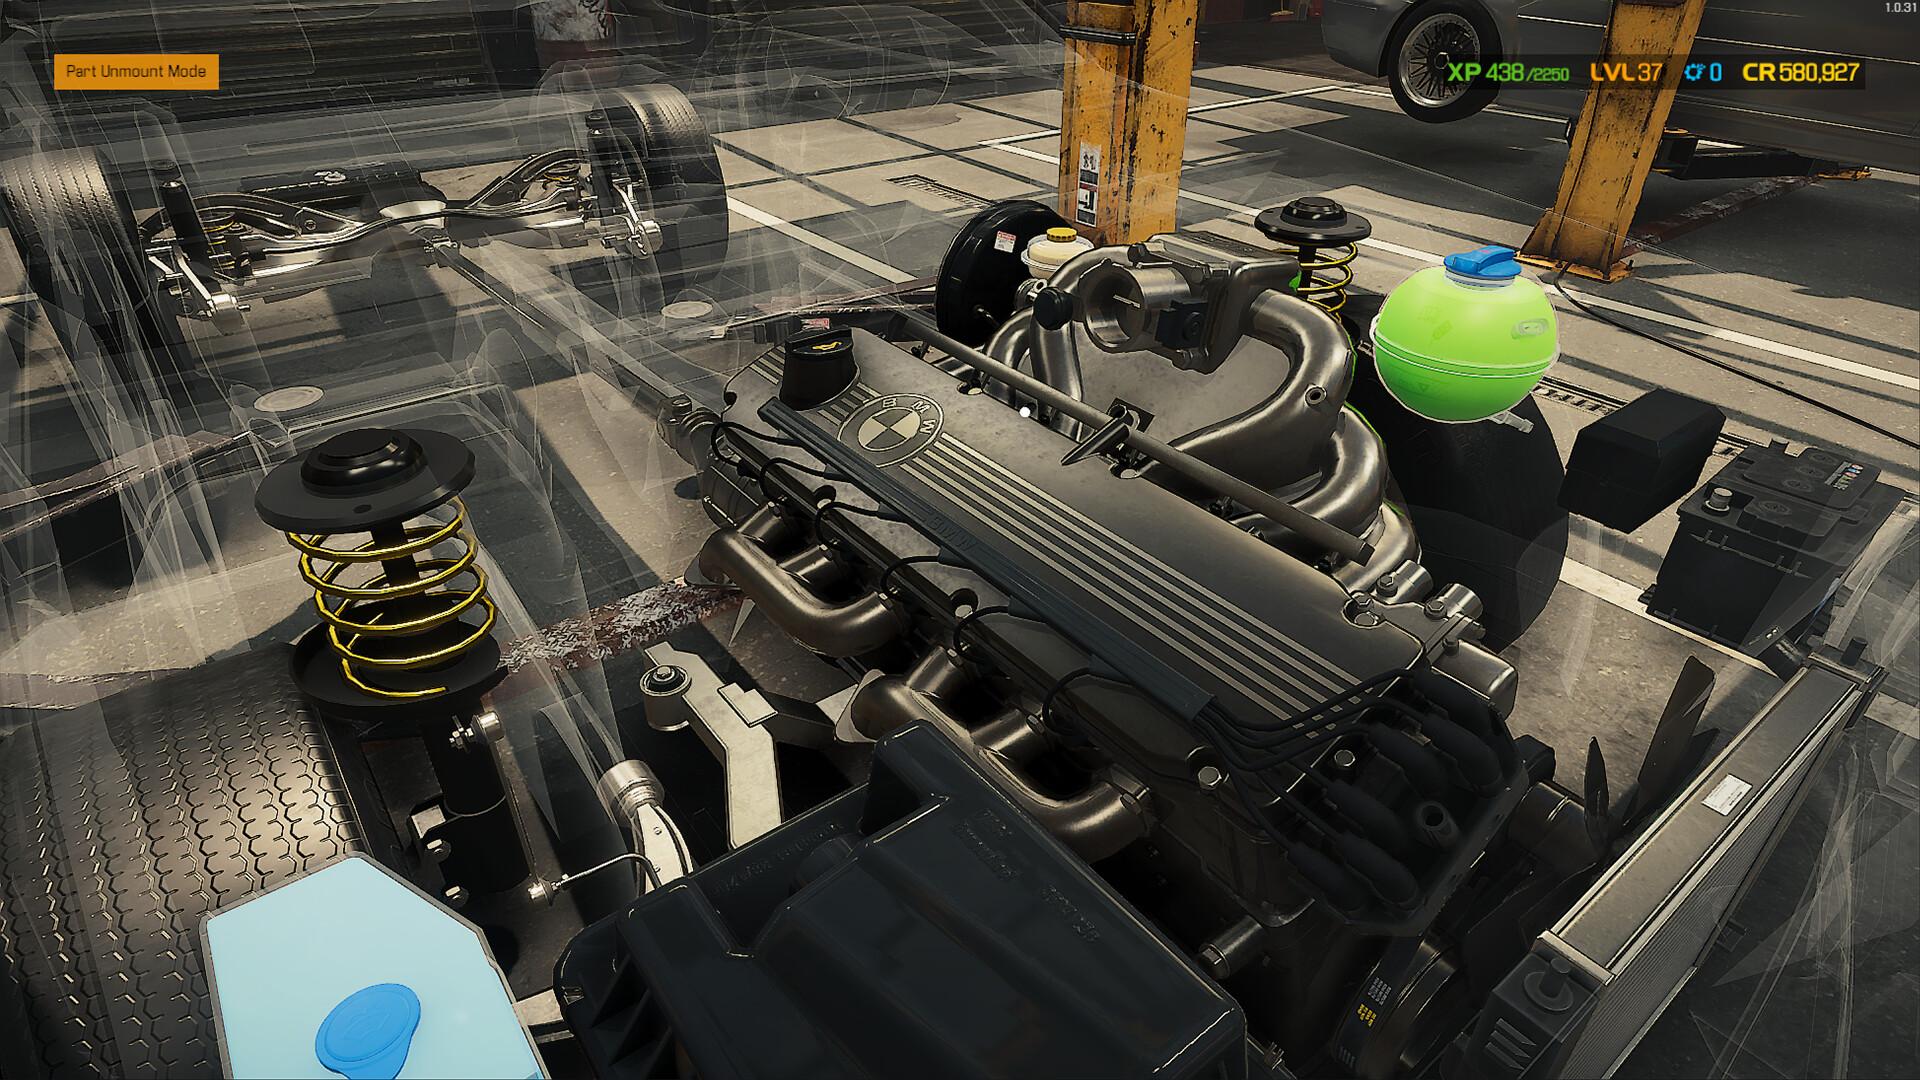 Car Mechanic Simulator 2021 - BMW DLC